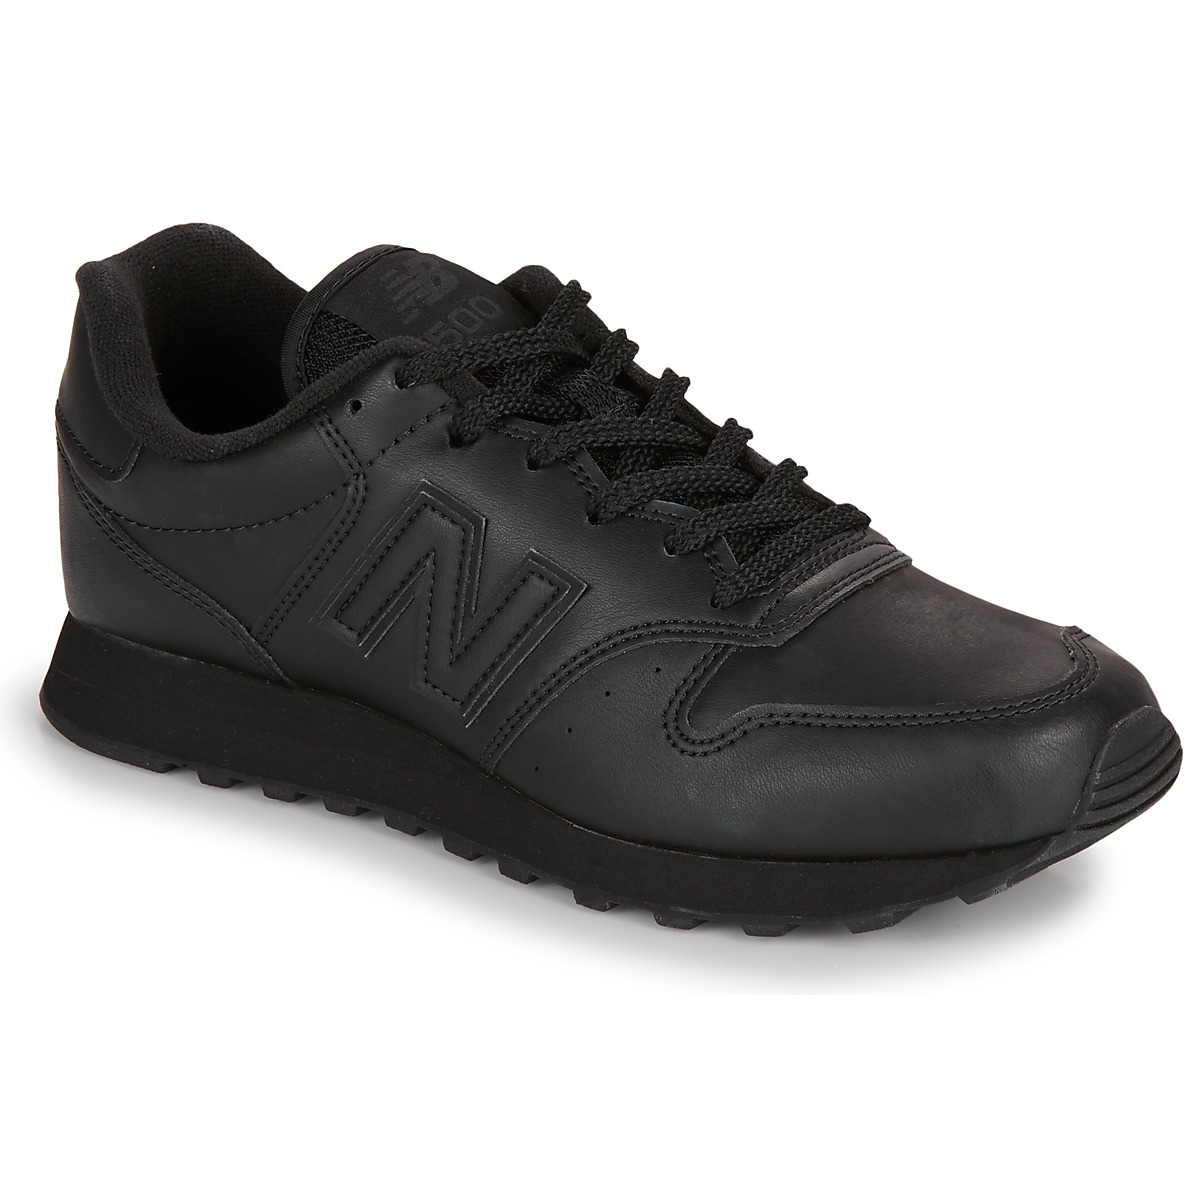 Zapatos Zapatillas bajas New Balance 500 Negro